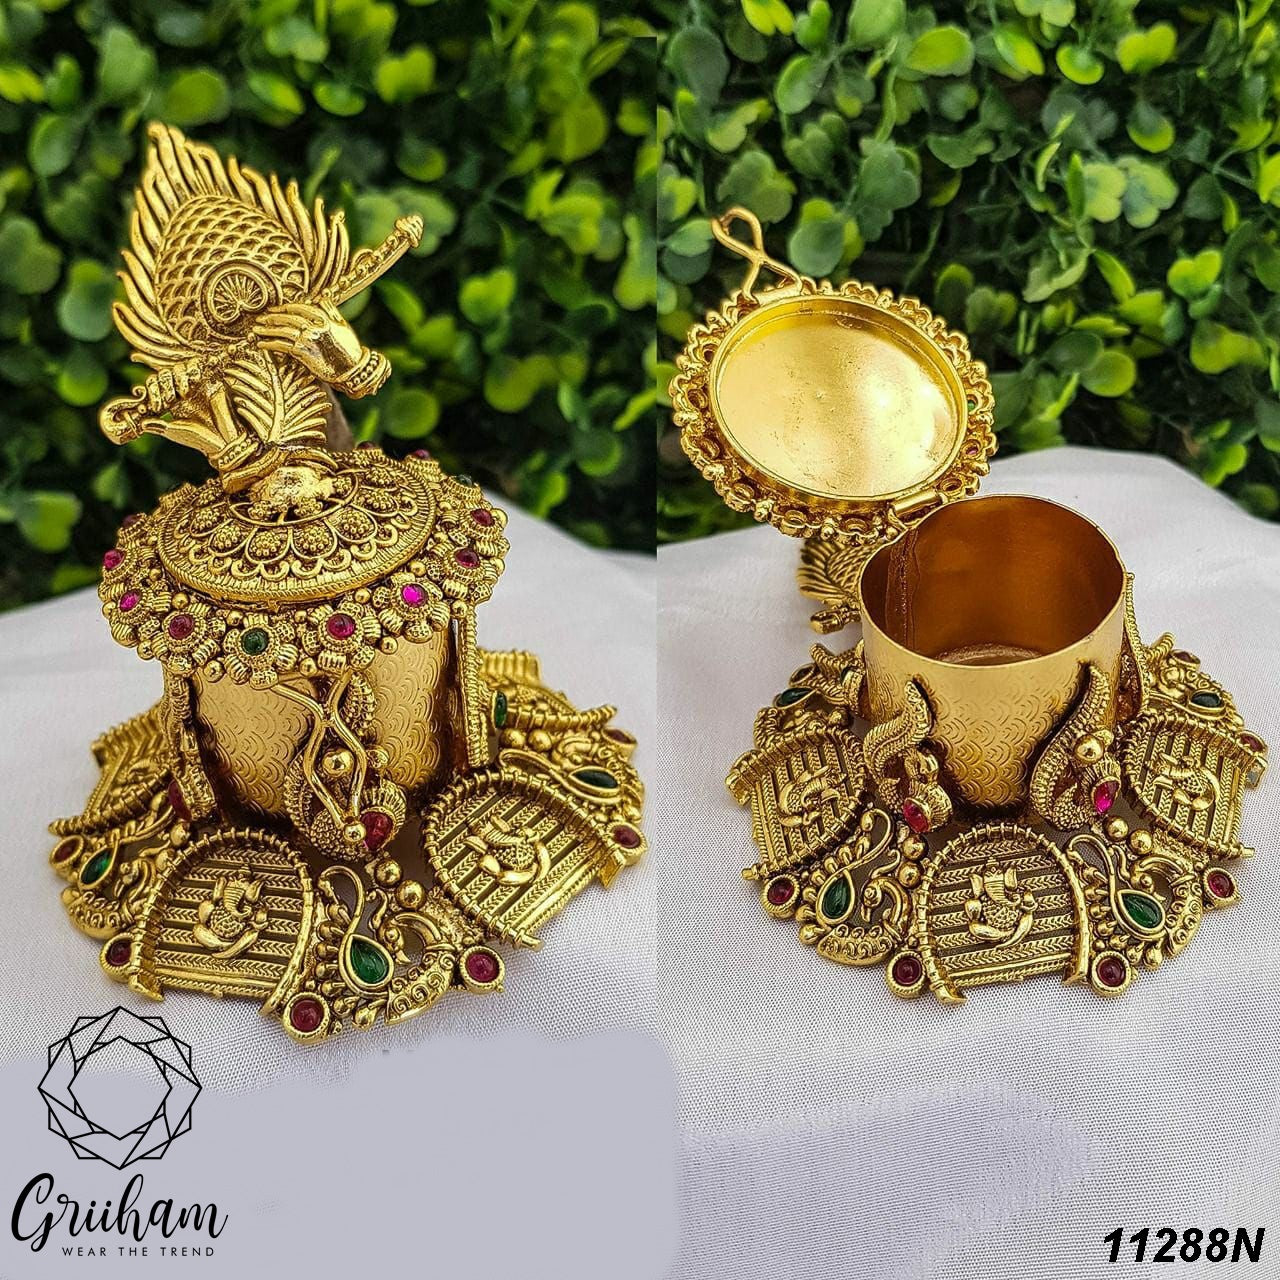 22k Gold Plated fully engraved Morpankh with krishna fluteKumkum box 11288N